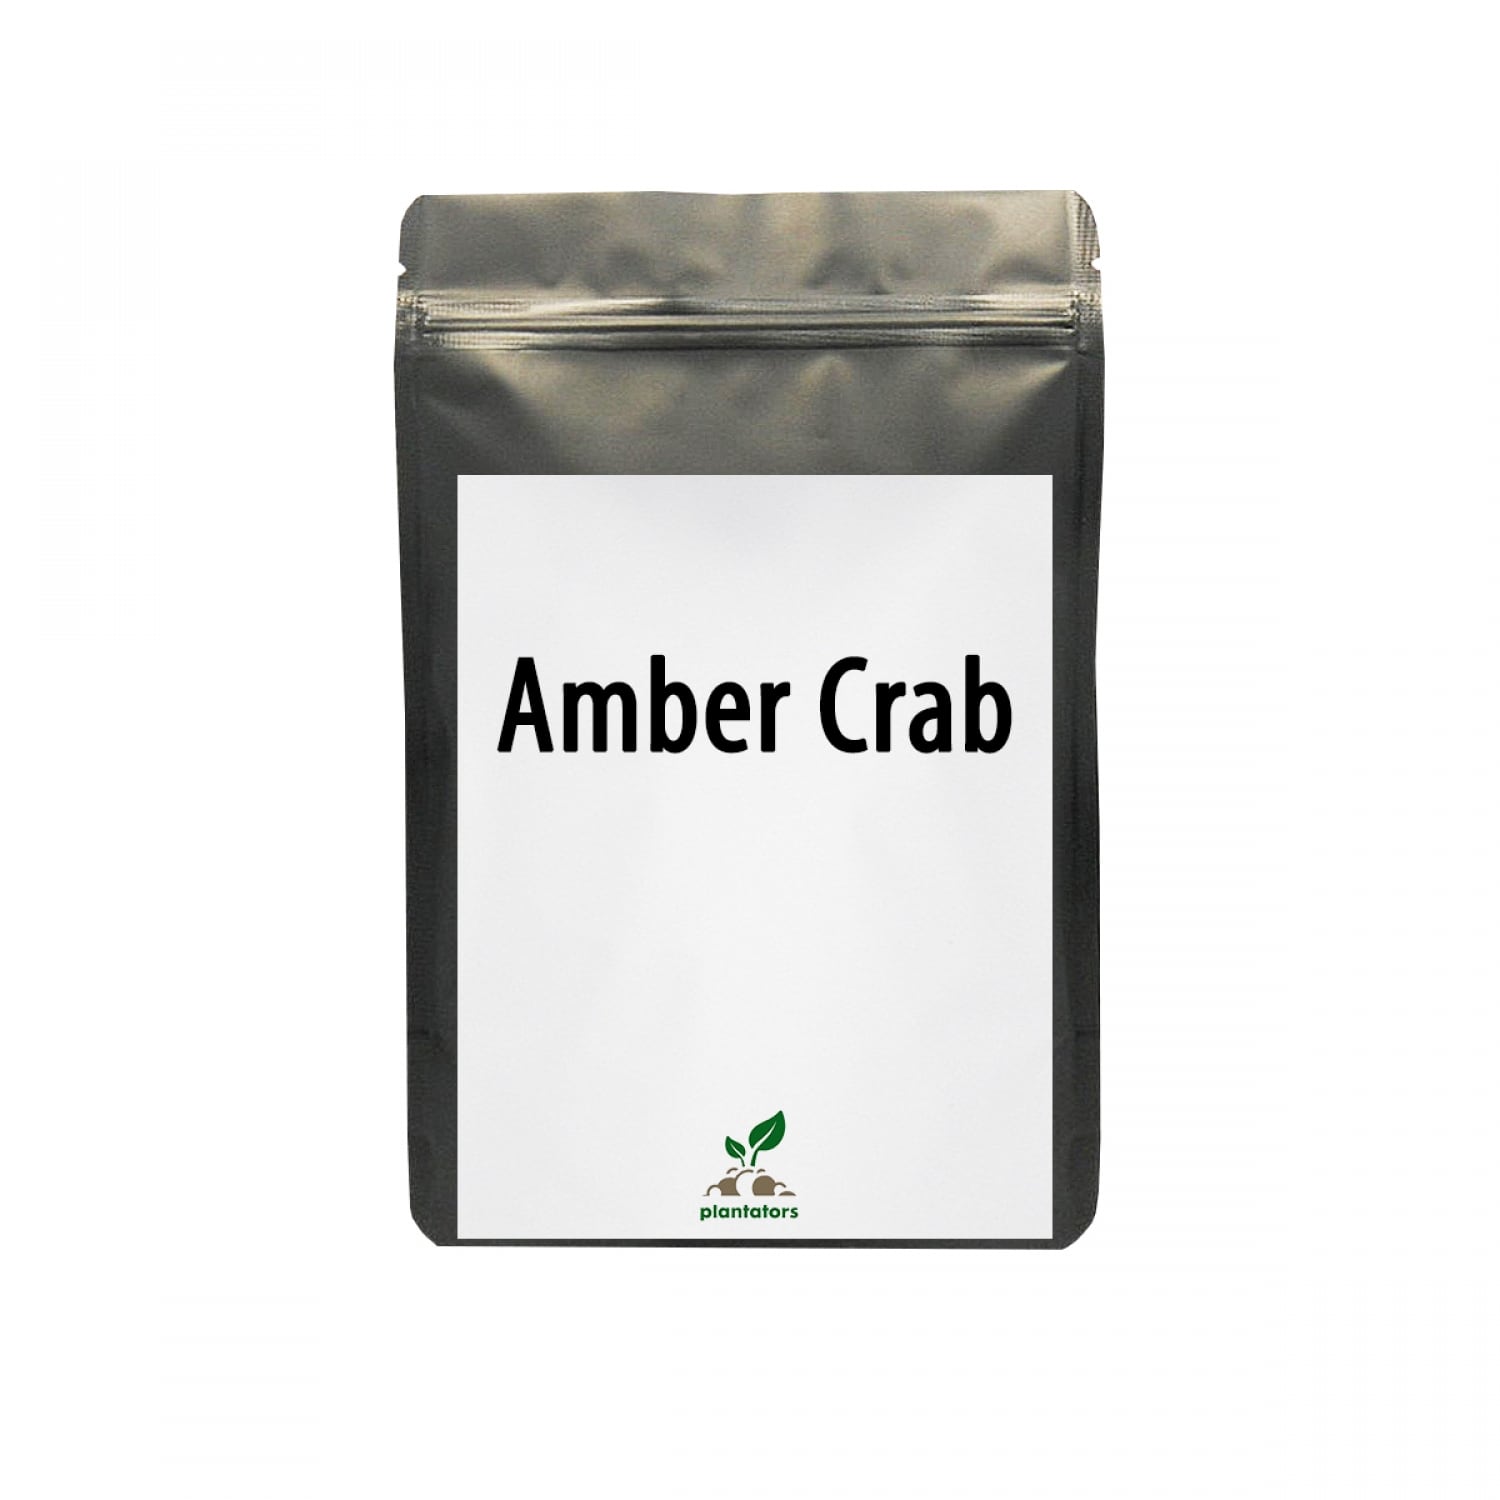 "Amber Crab" 1 табл, 2 гр